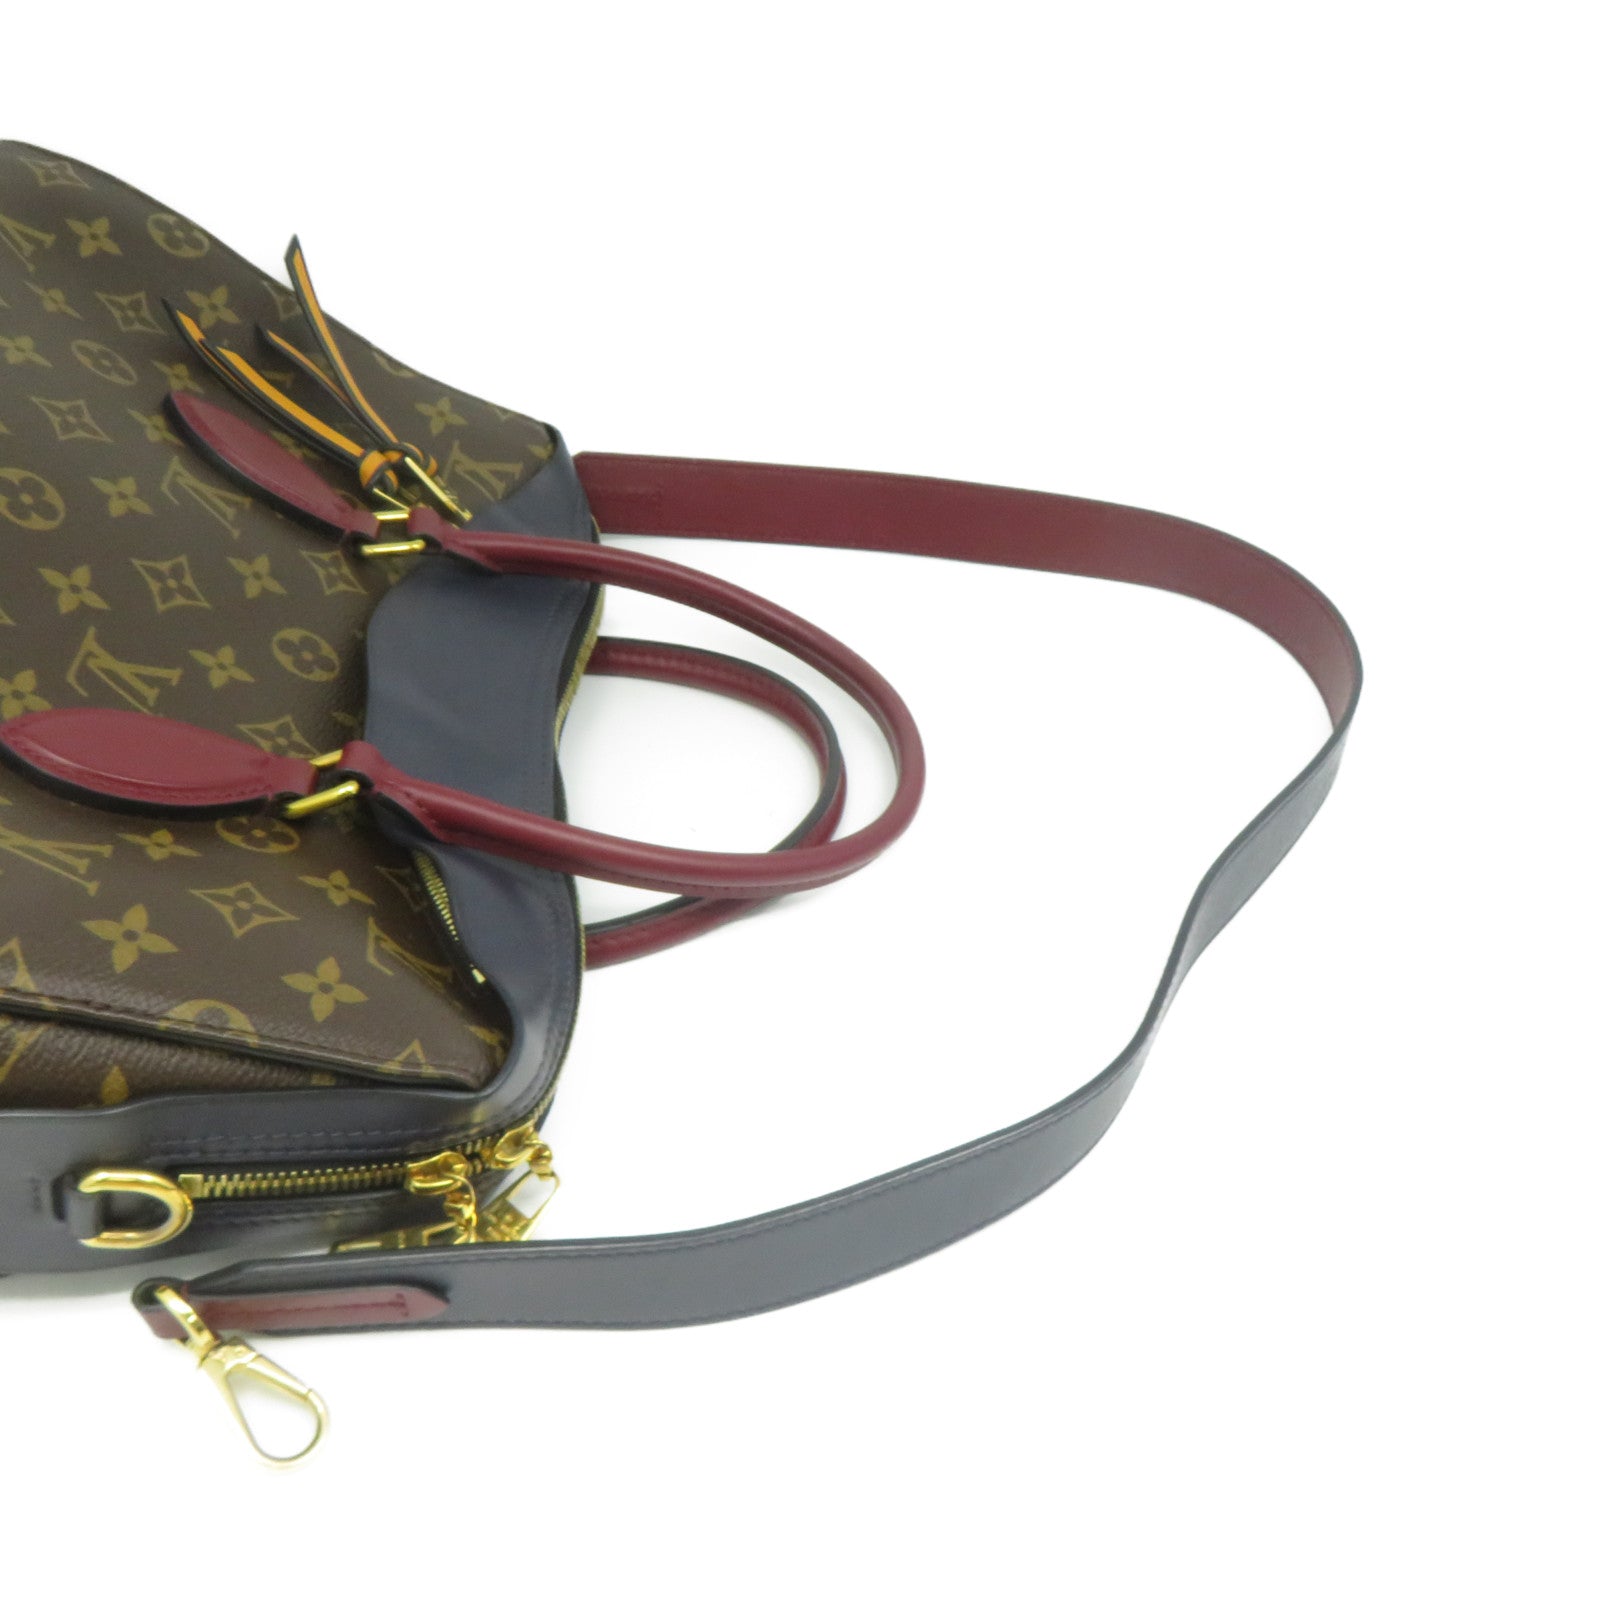 LOUIS VUITTON Monogram Reverse Petite Malle Gold Buckle Shoulder Bag B –  Brand Off Hong Kong Online Store